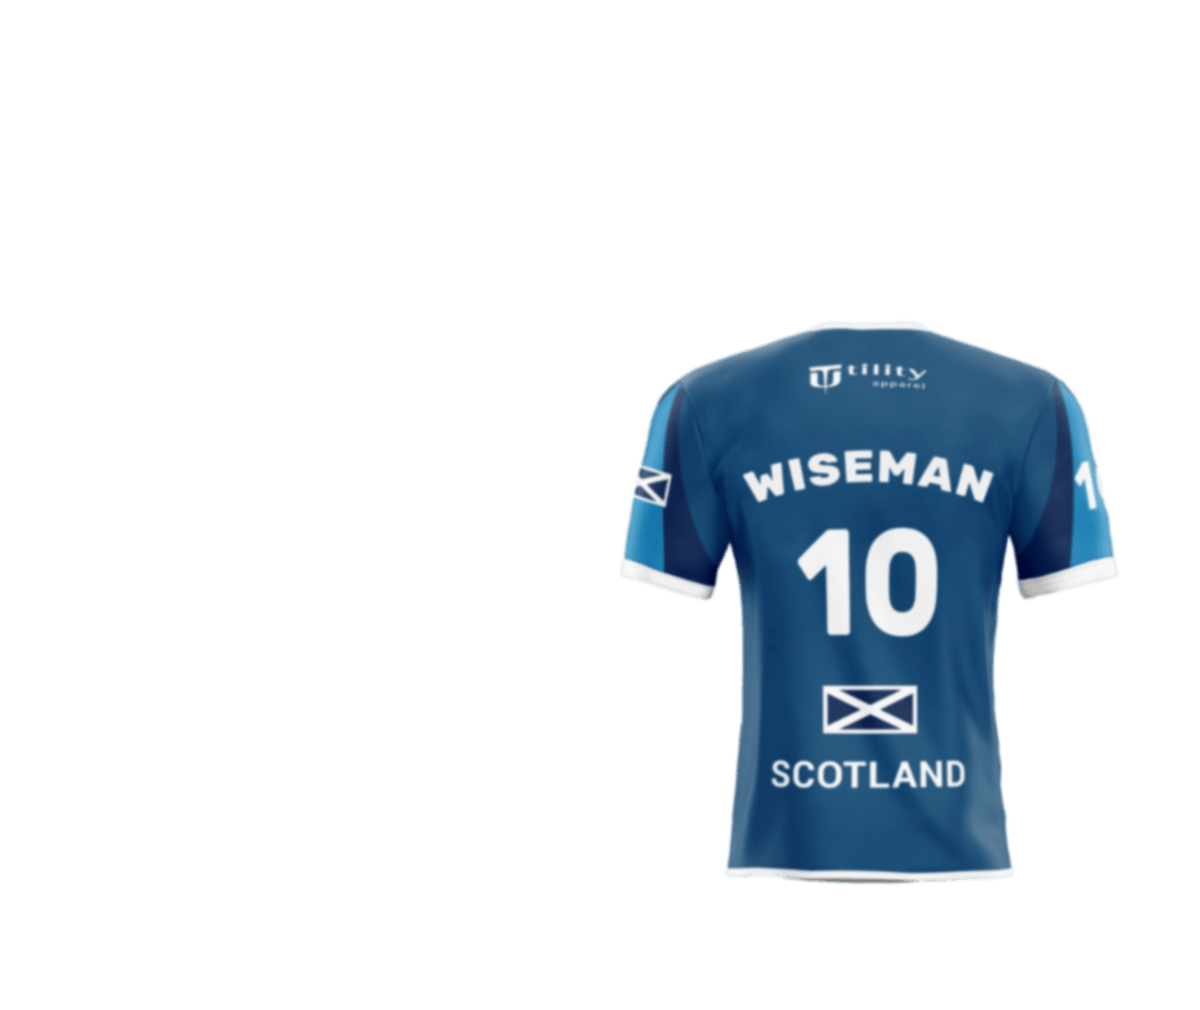 National Quadball sports jersey for team Scotland